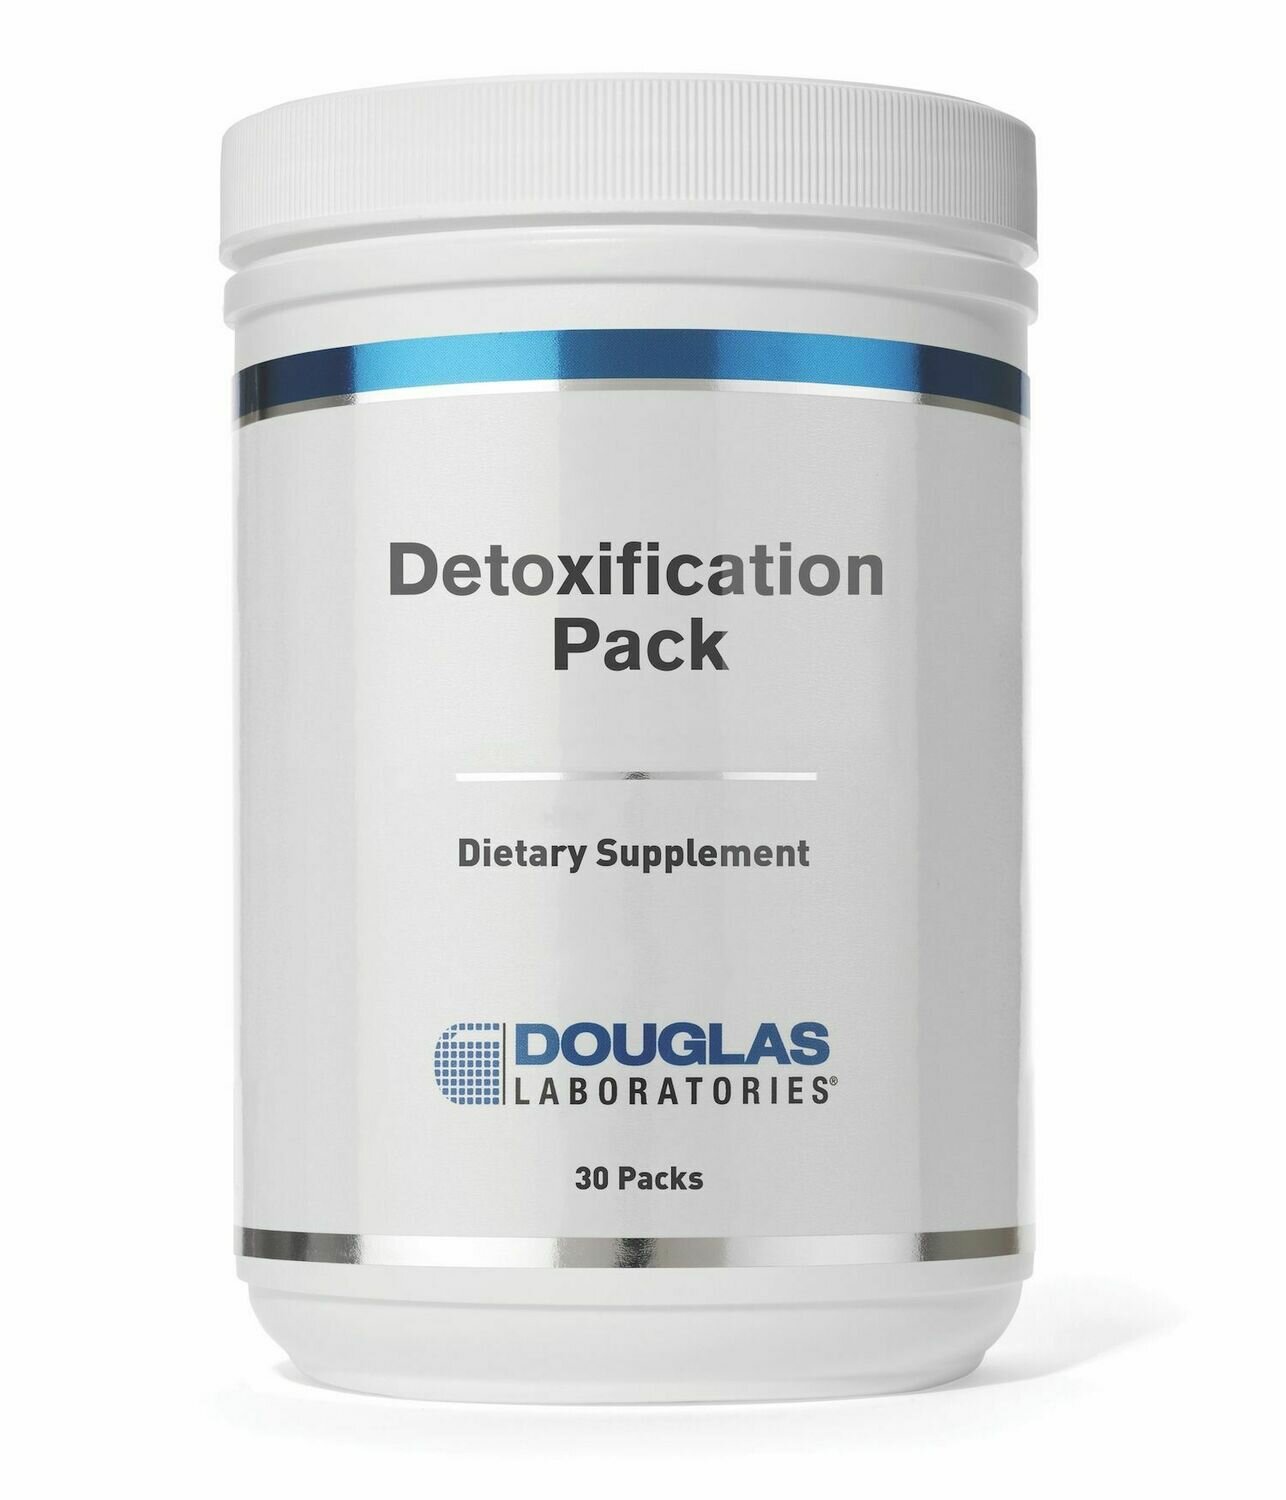 Detoxification Pack